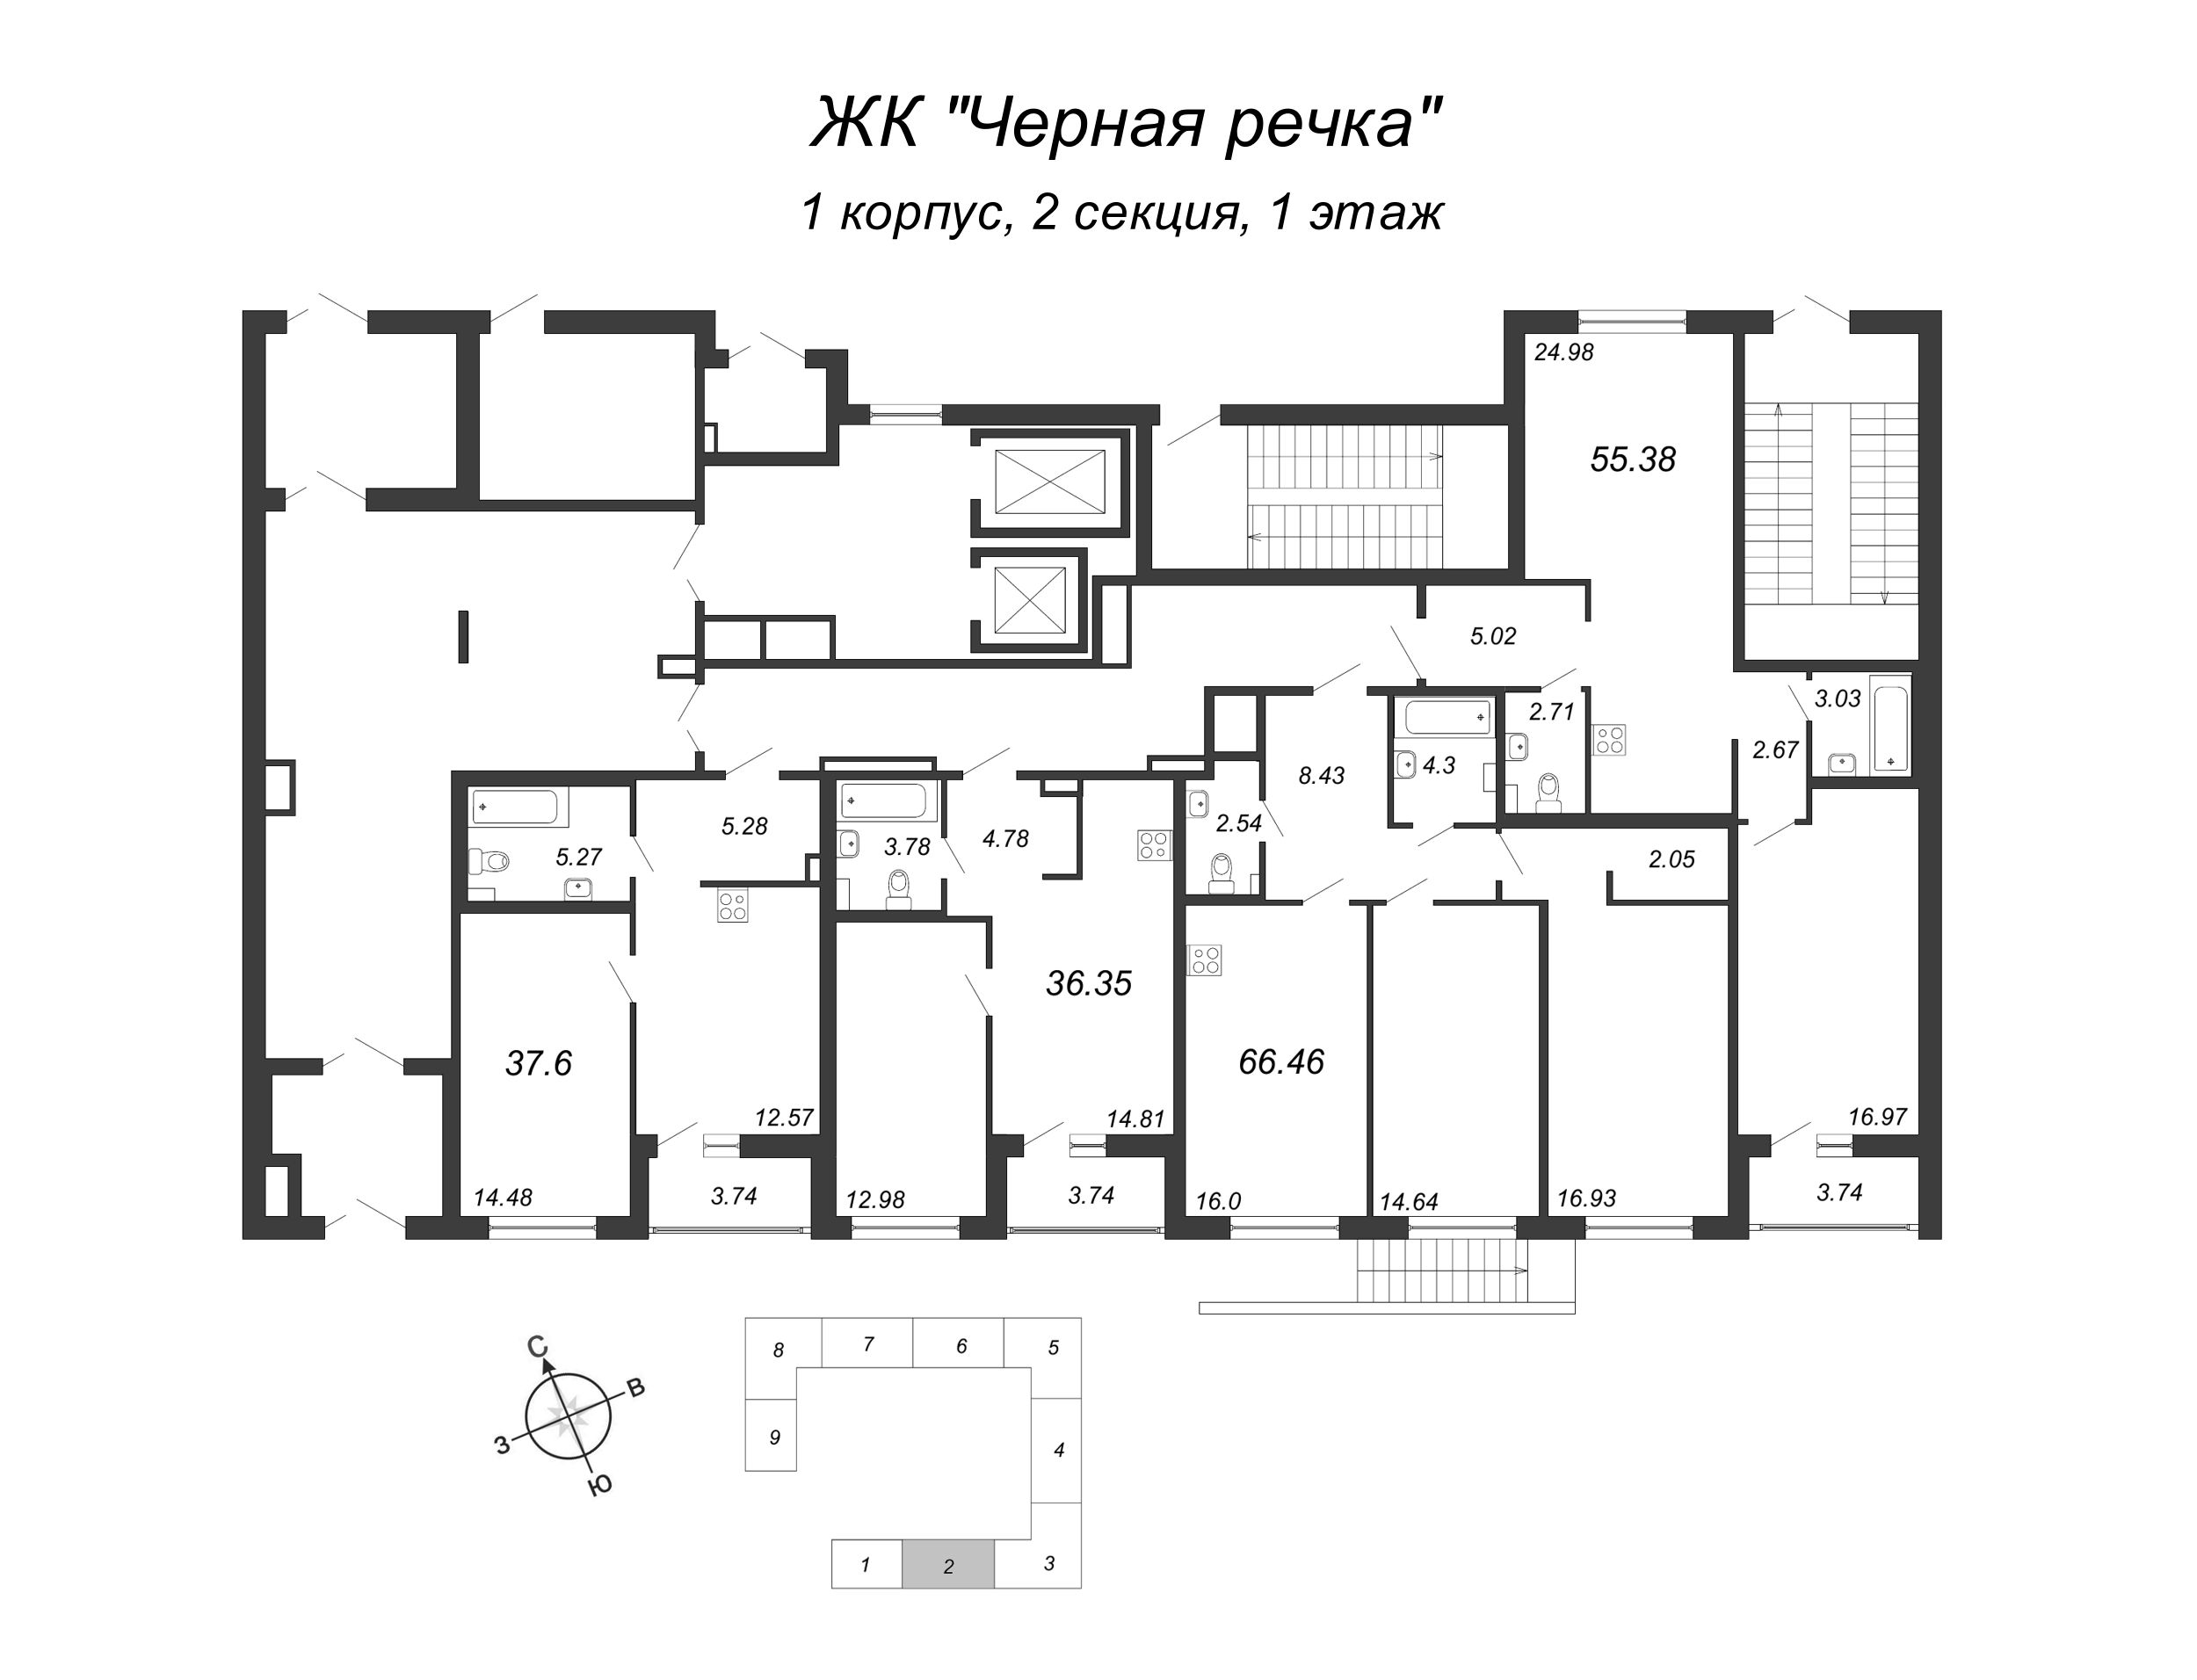 3-комнатная (Евро) квартира, 66.46 м² - планировка этажа